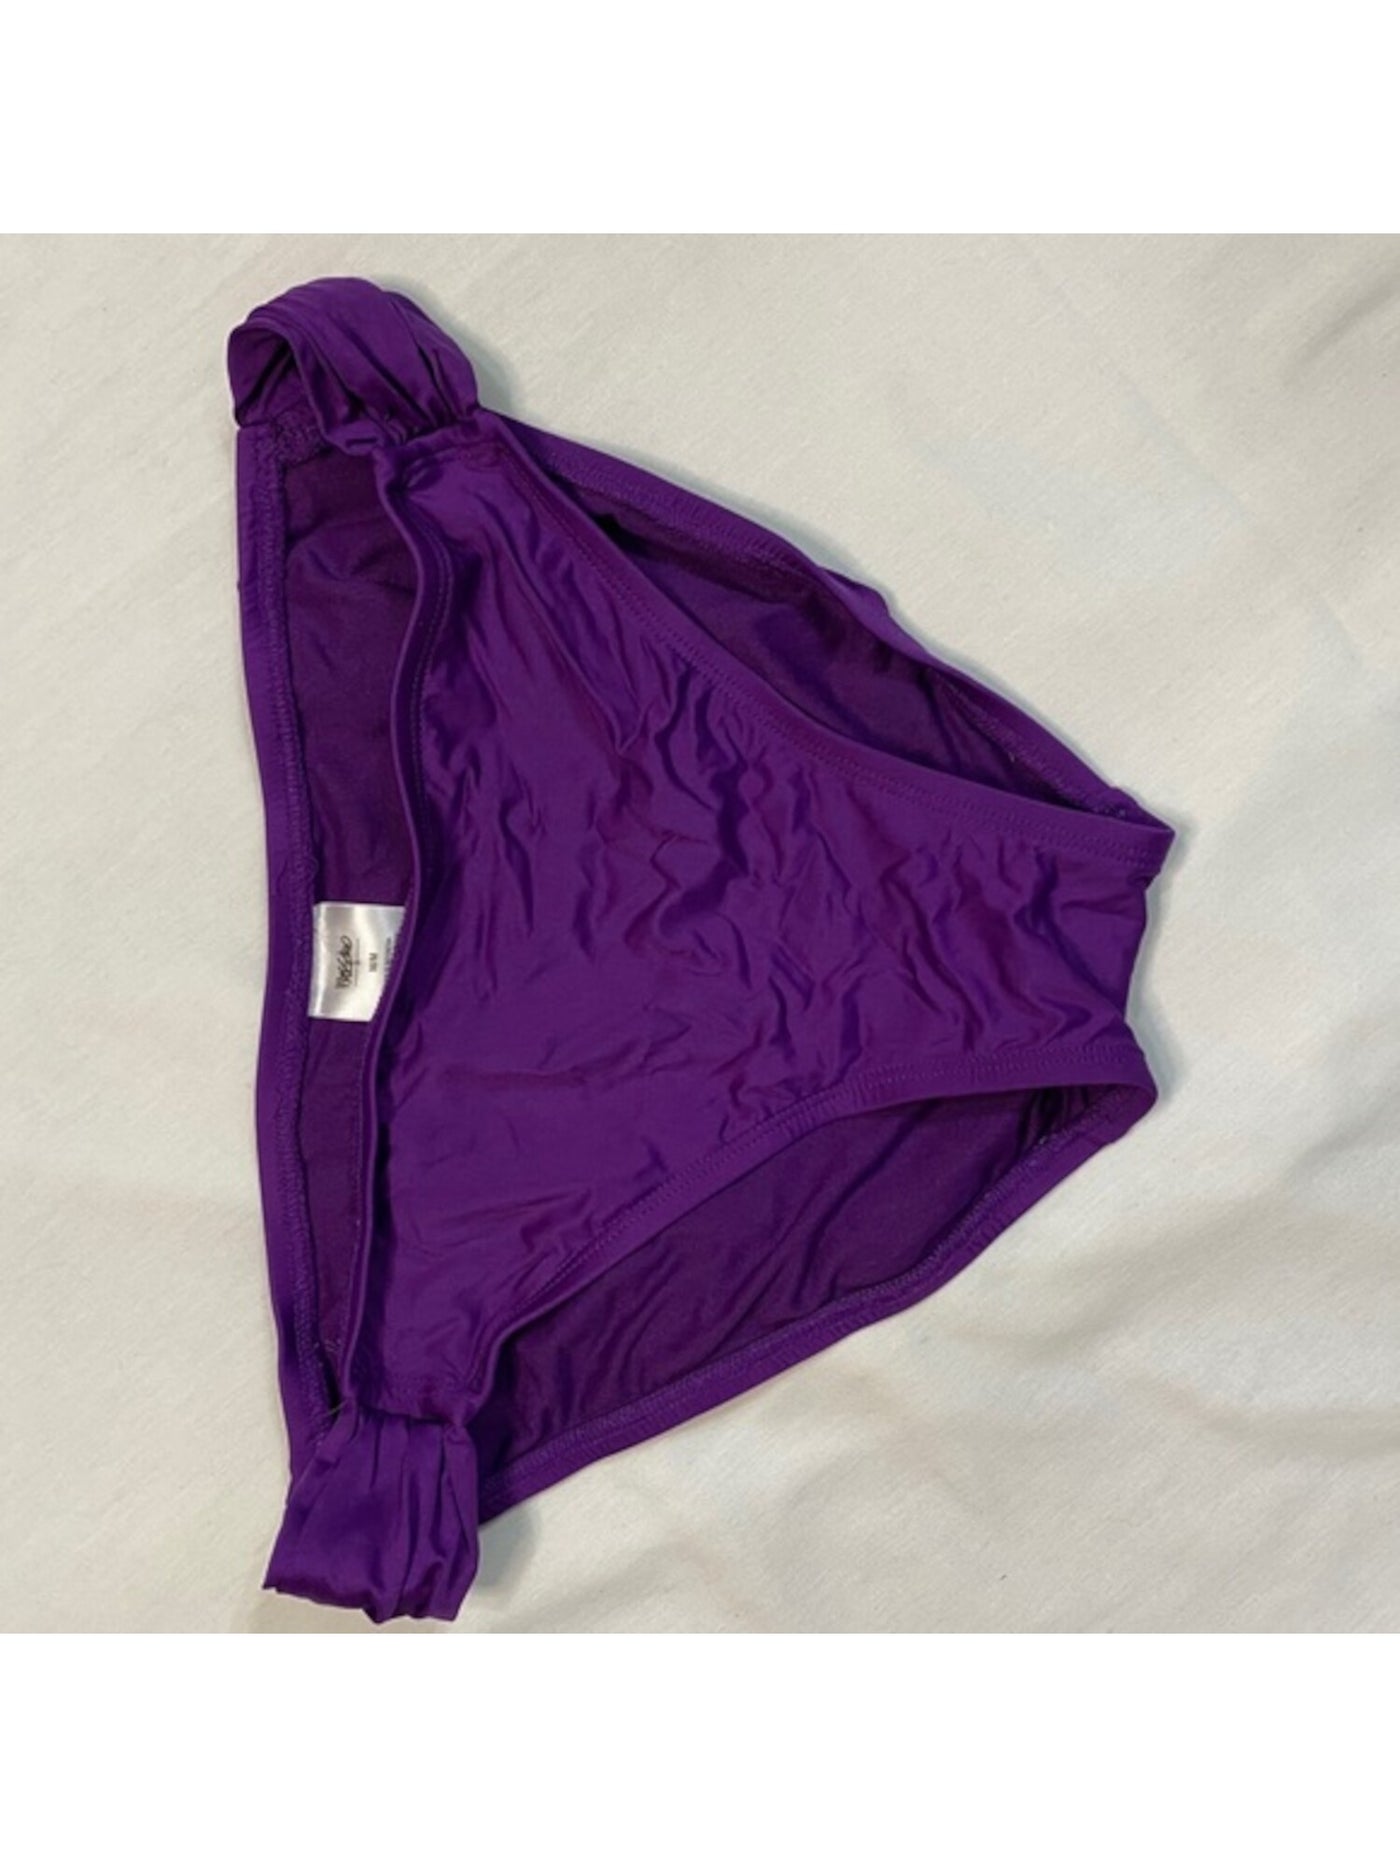 MOSSIMO SUPPLY CO. Women's Purple Tab Side Bikini Bottom XL